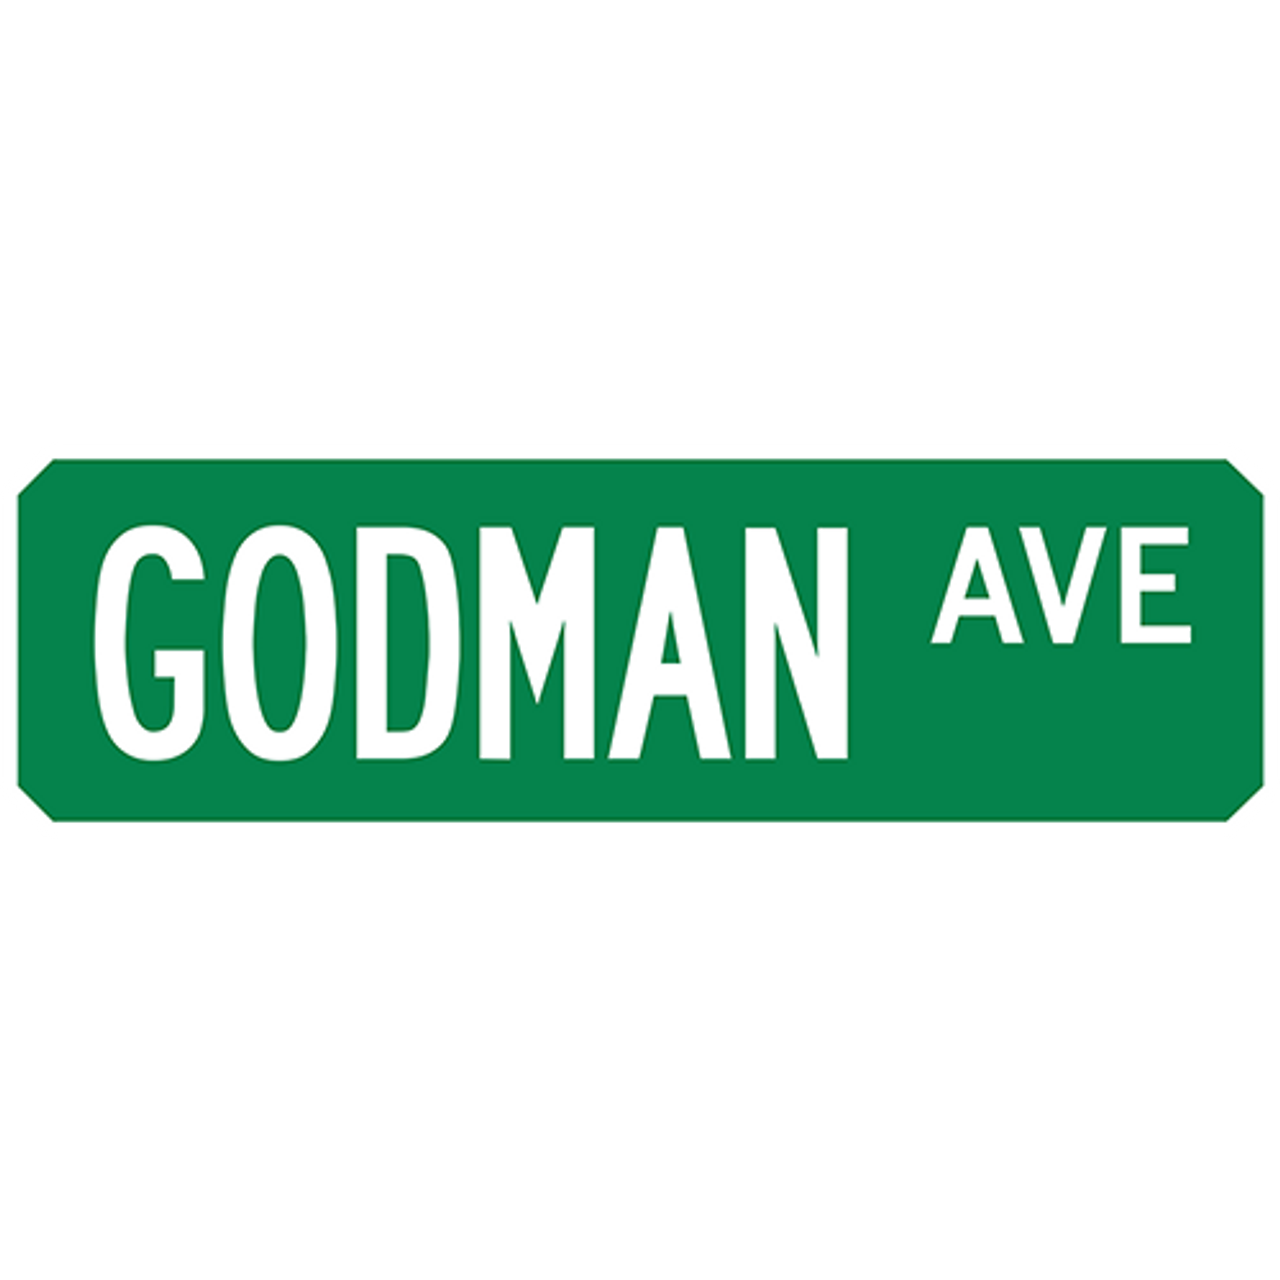 Godman Ave Street Sign Muncie